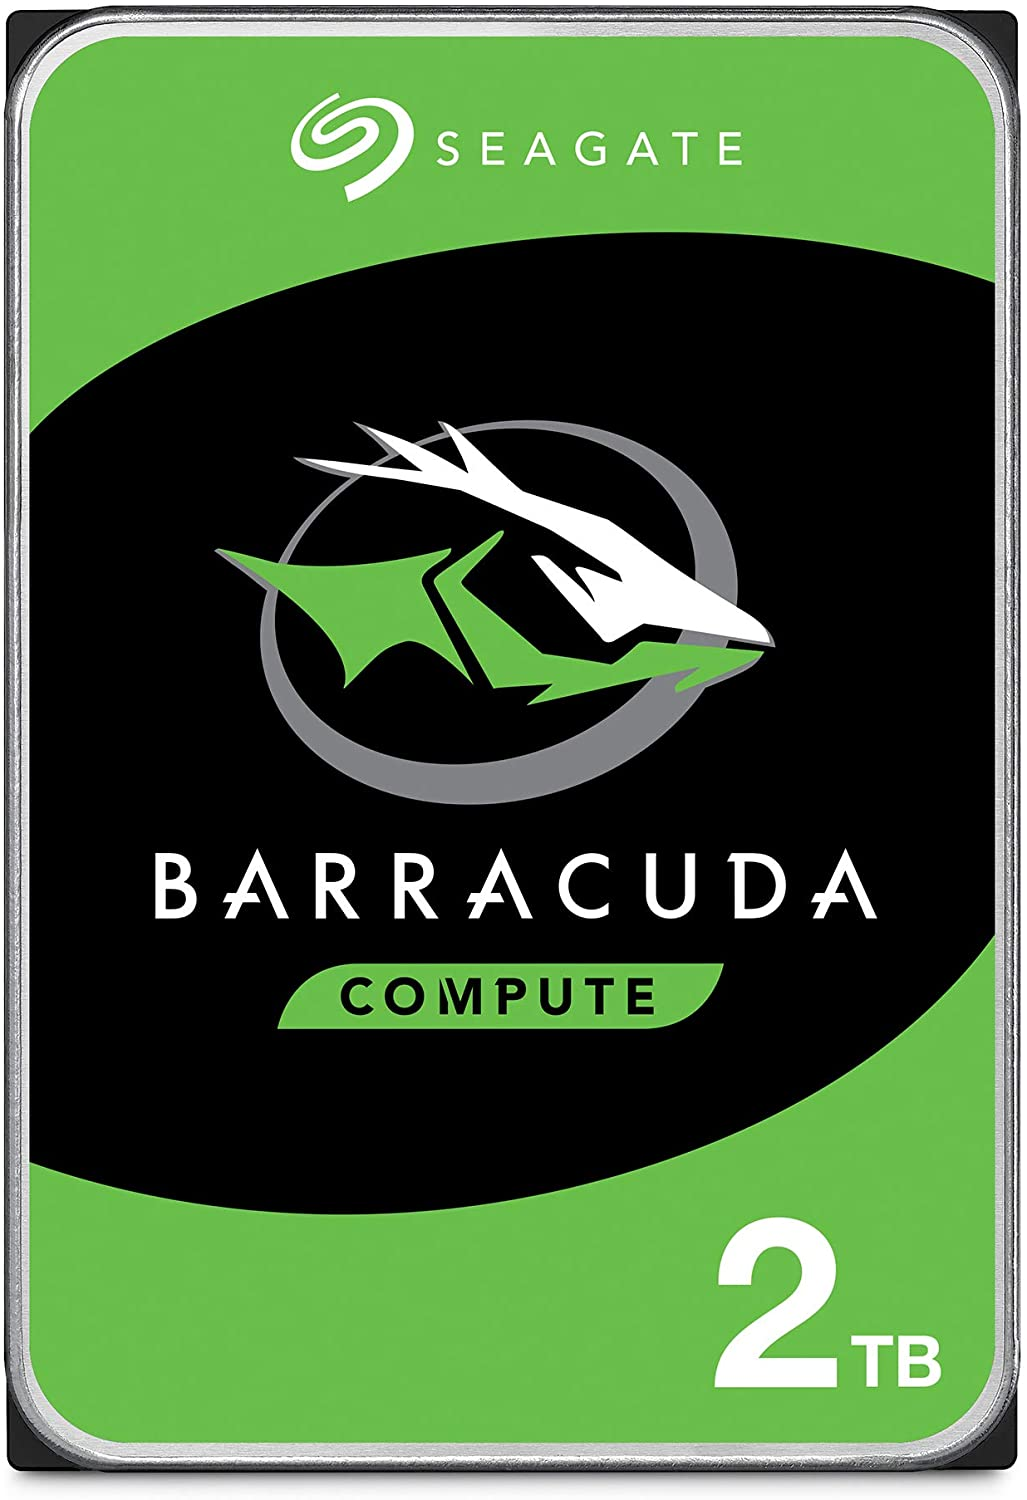 Seagate BarraCuda 2TB Internal Hard Drive HDD – 3.5 Inch SATA 6Gb/s 7200 RPM 256MB Cache 3.5-Inch – Frustration Free Packaging $46.99